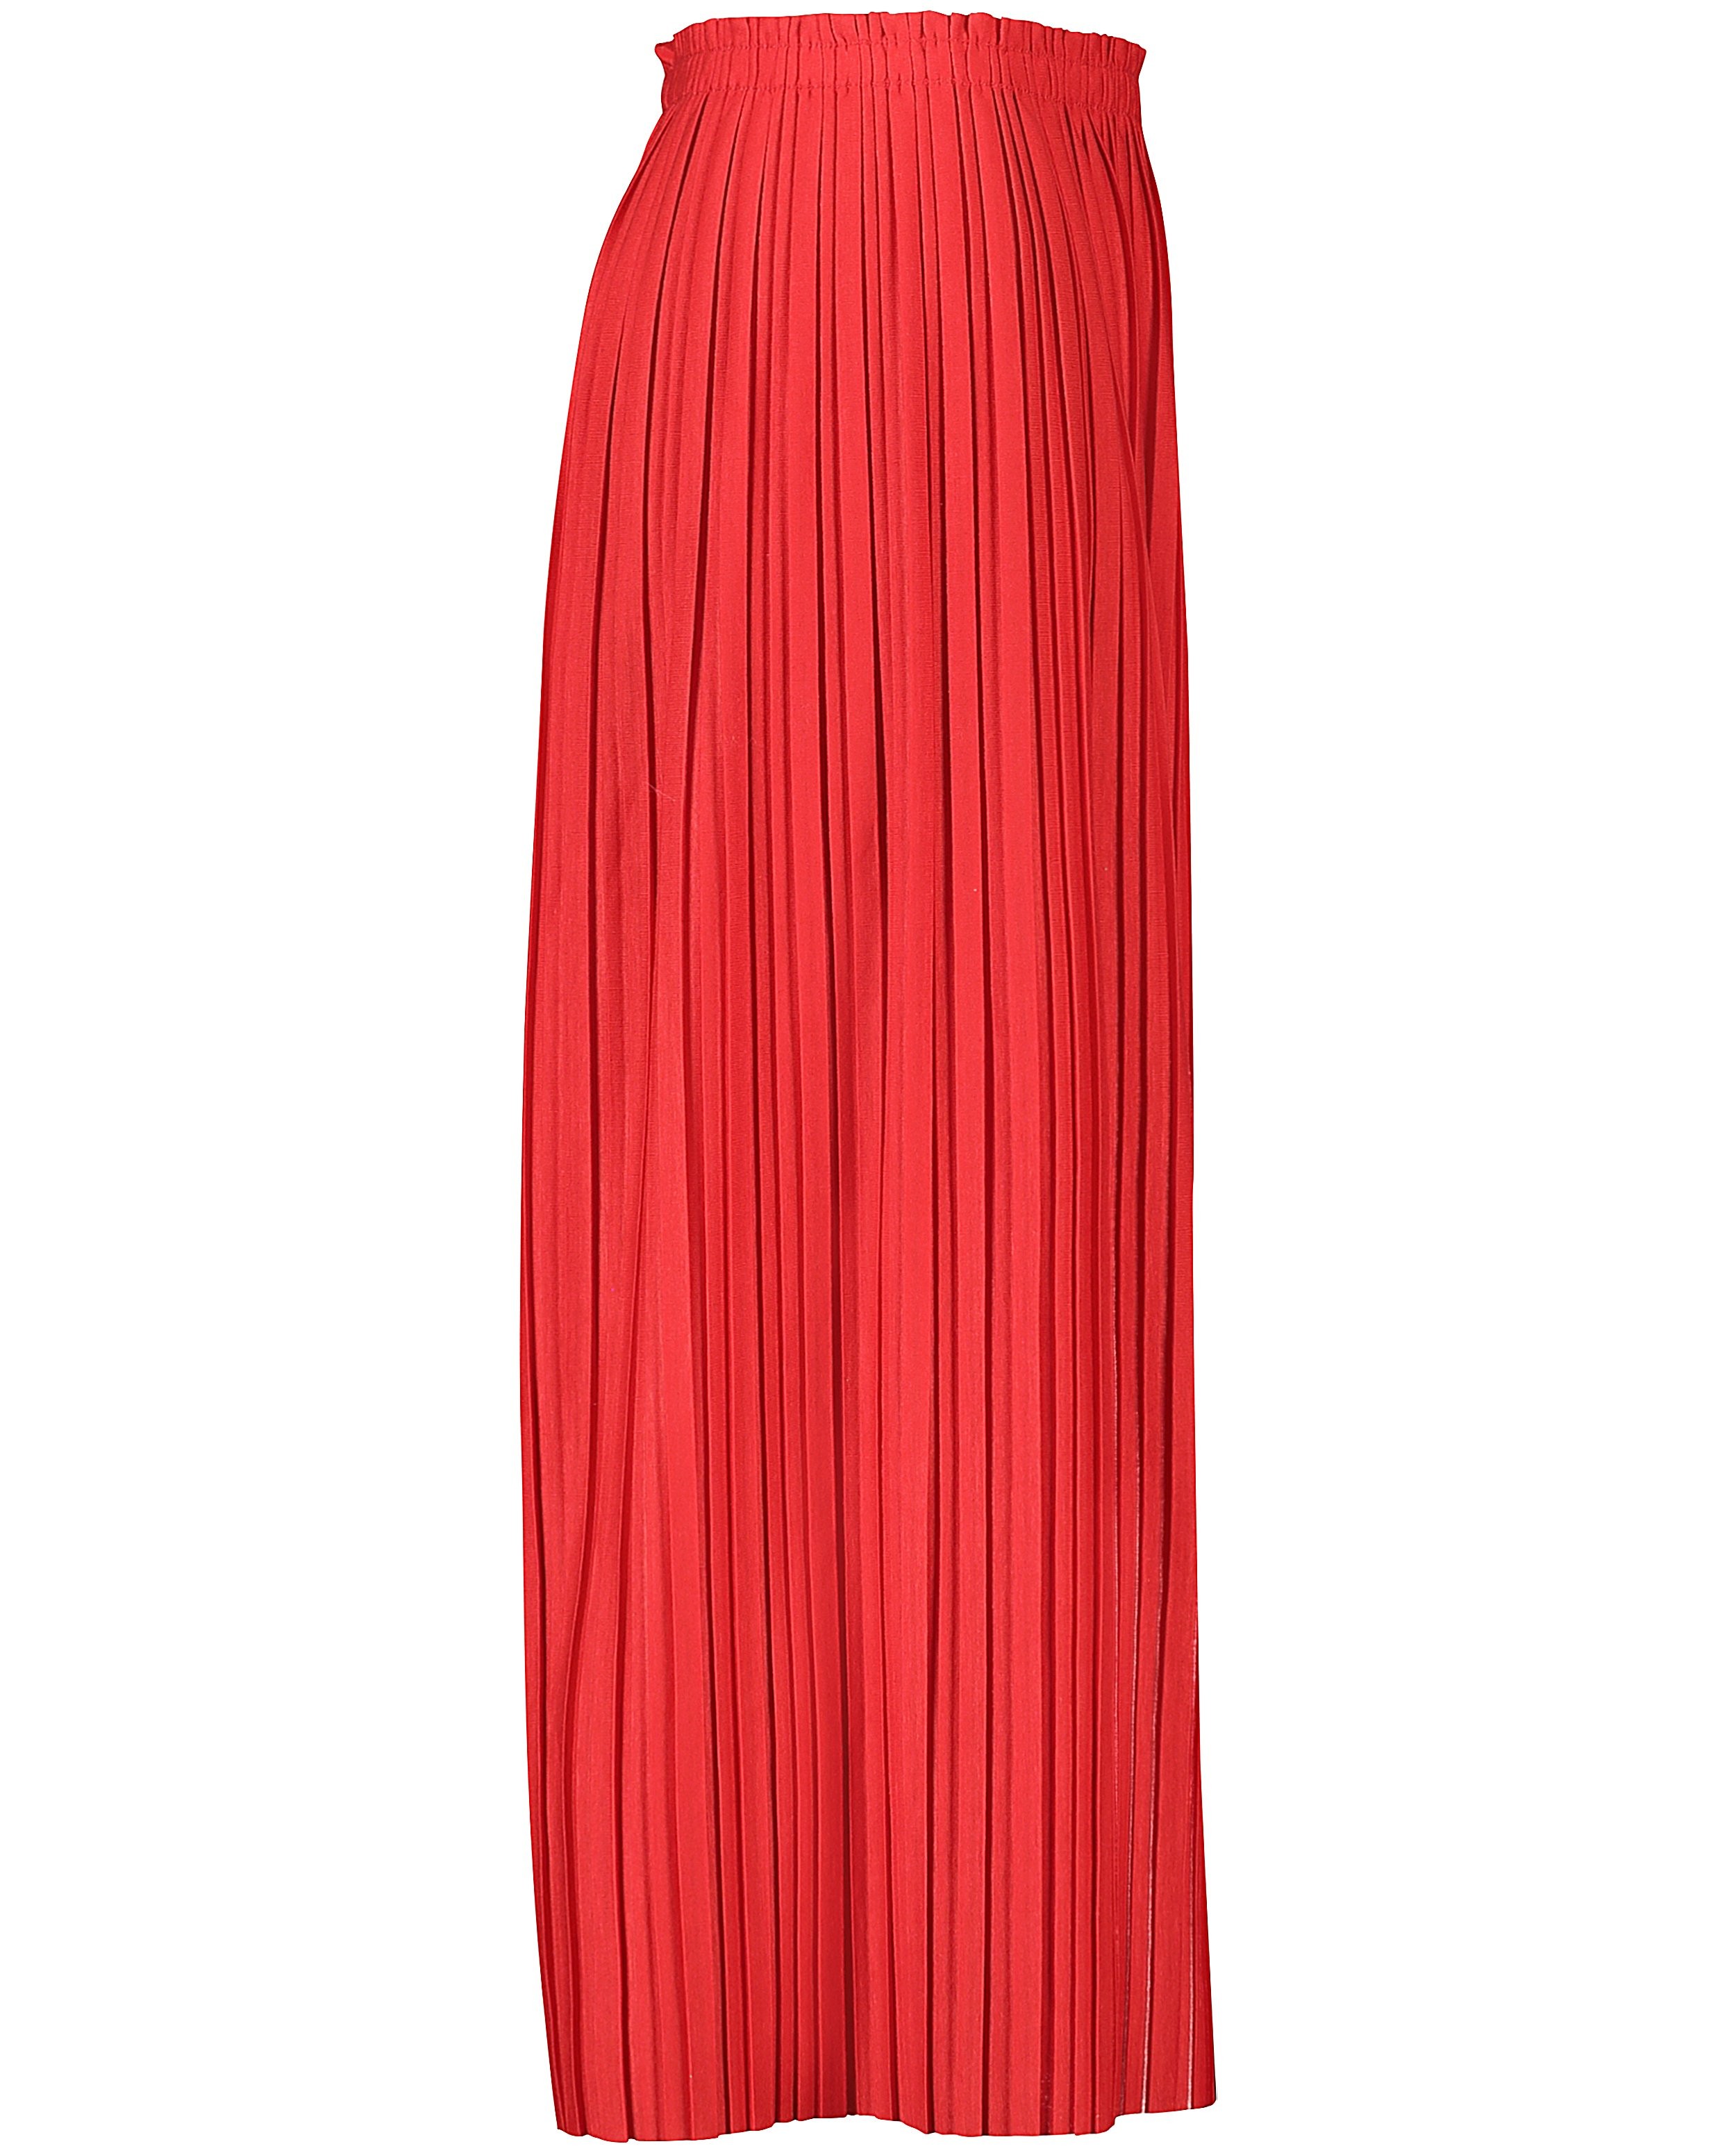 Pantalons - Pantalon plissé rouge Communion